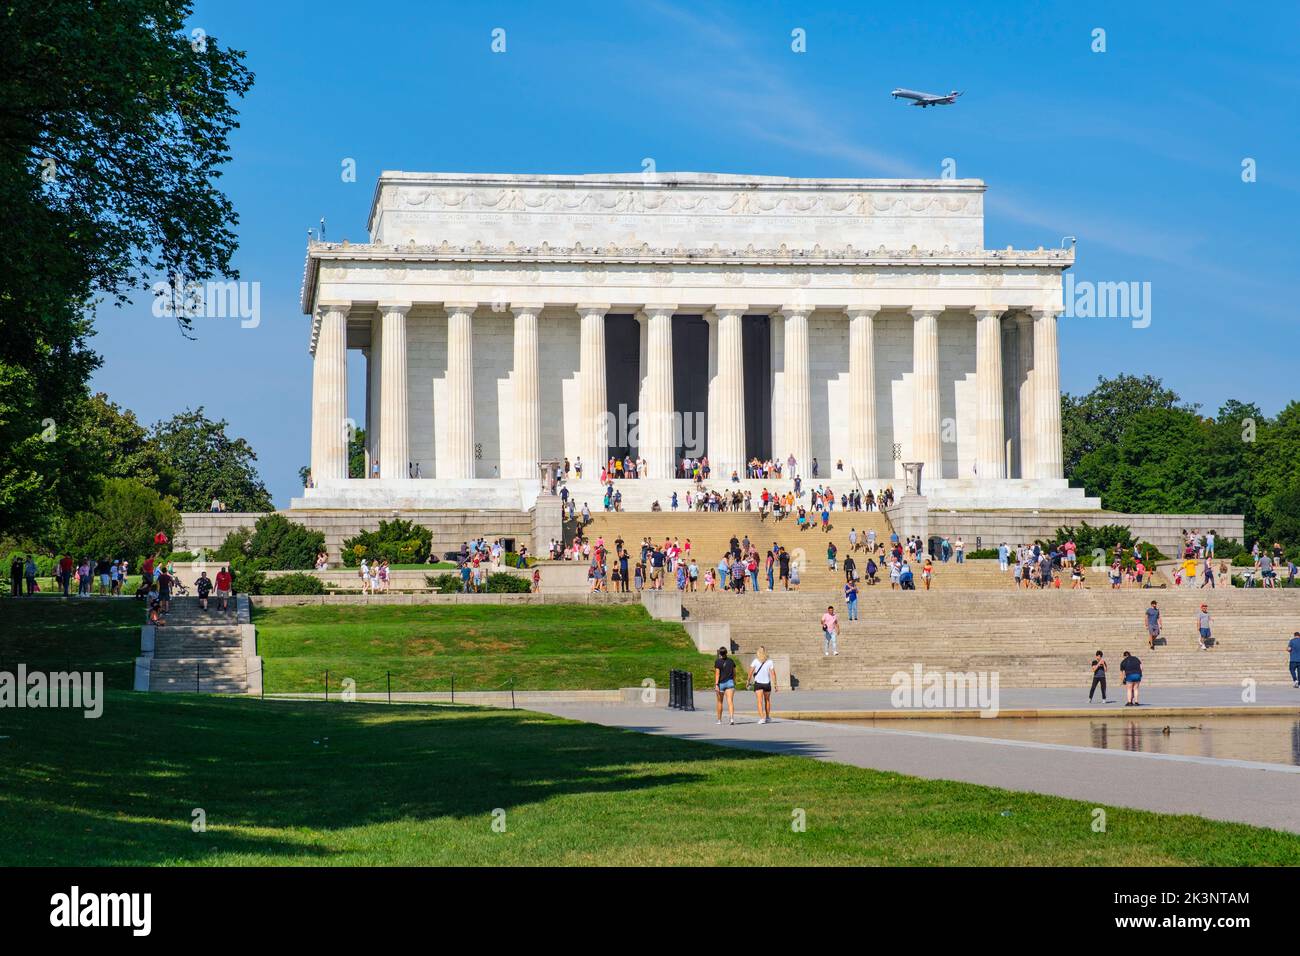 Lincoln Memorial, Washington, DC, USA. Flugzeug Nähert Sich Dem Reagan National Airport. Stockfoto